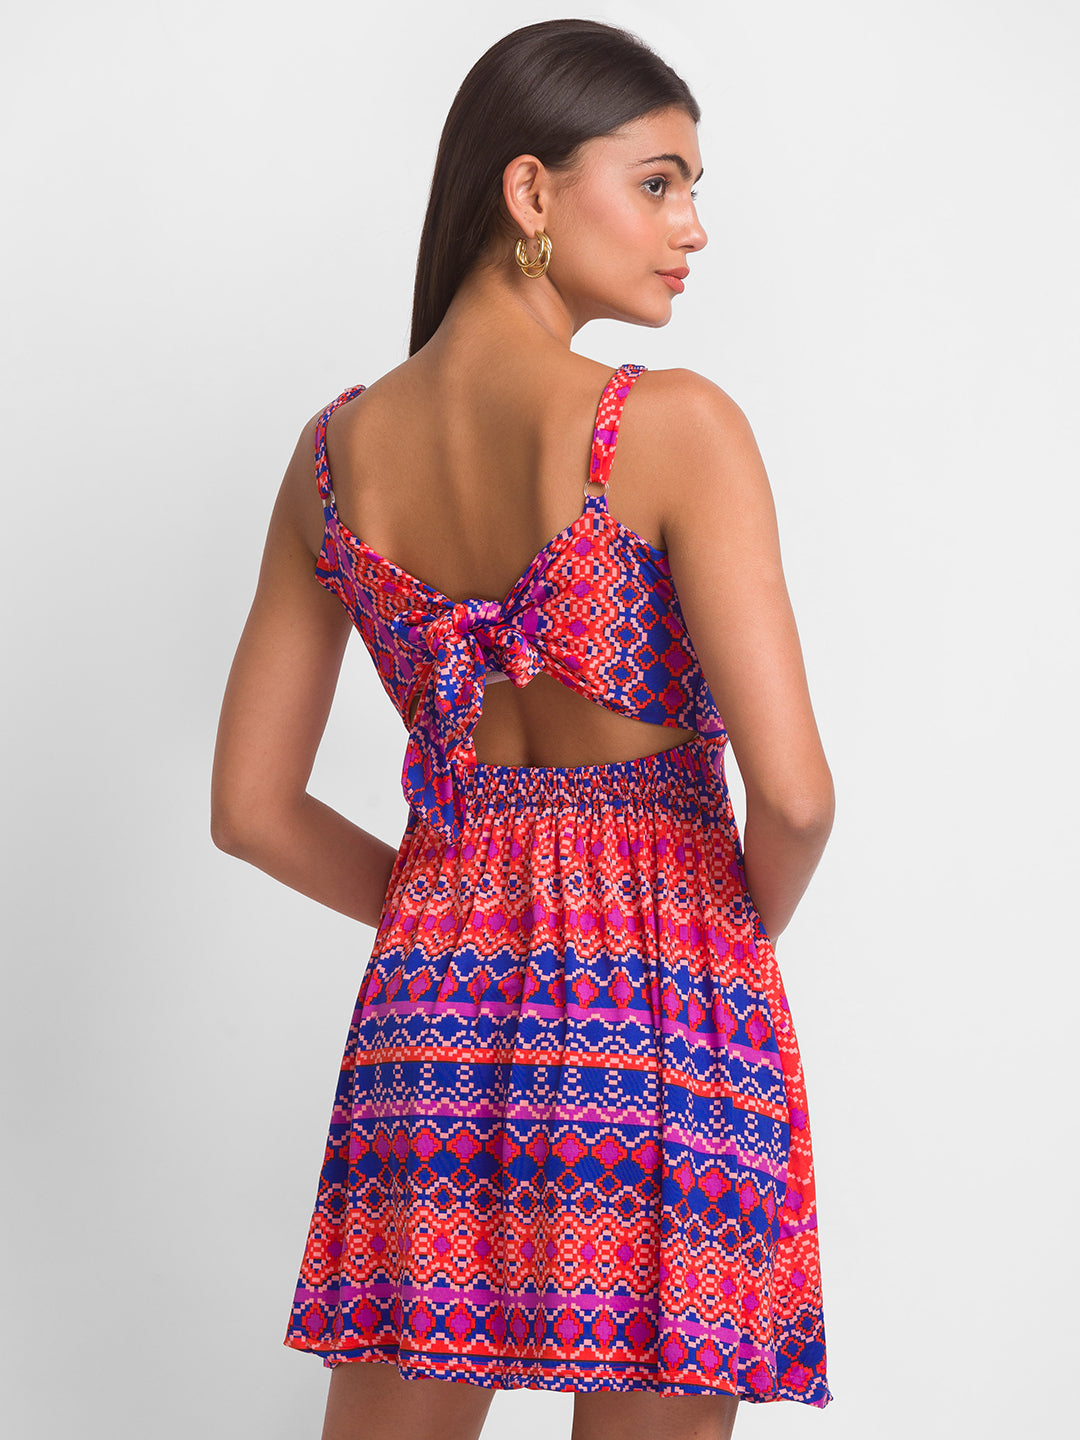 Globus Multi Printed Dress